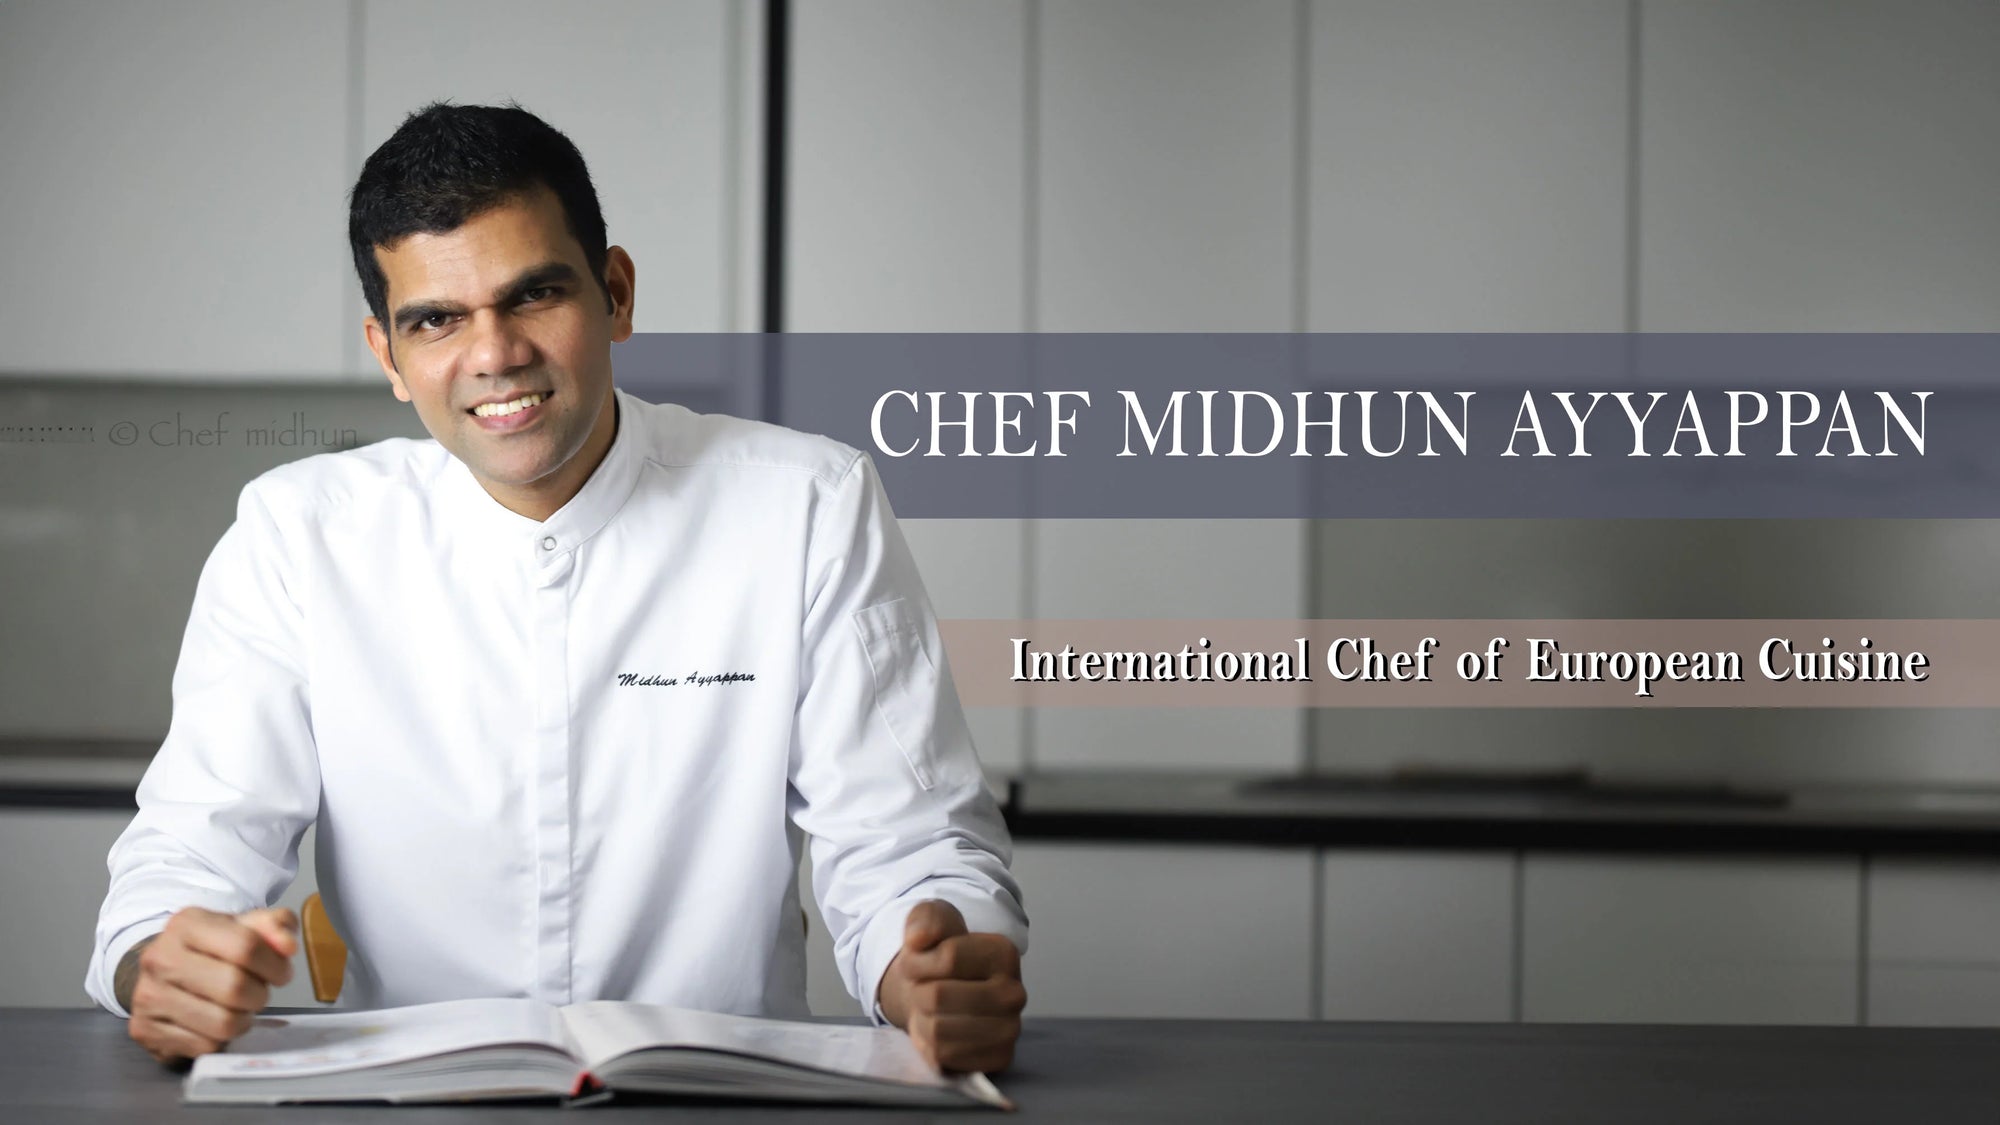 Chef Midhun Ayyappan